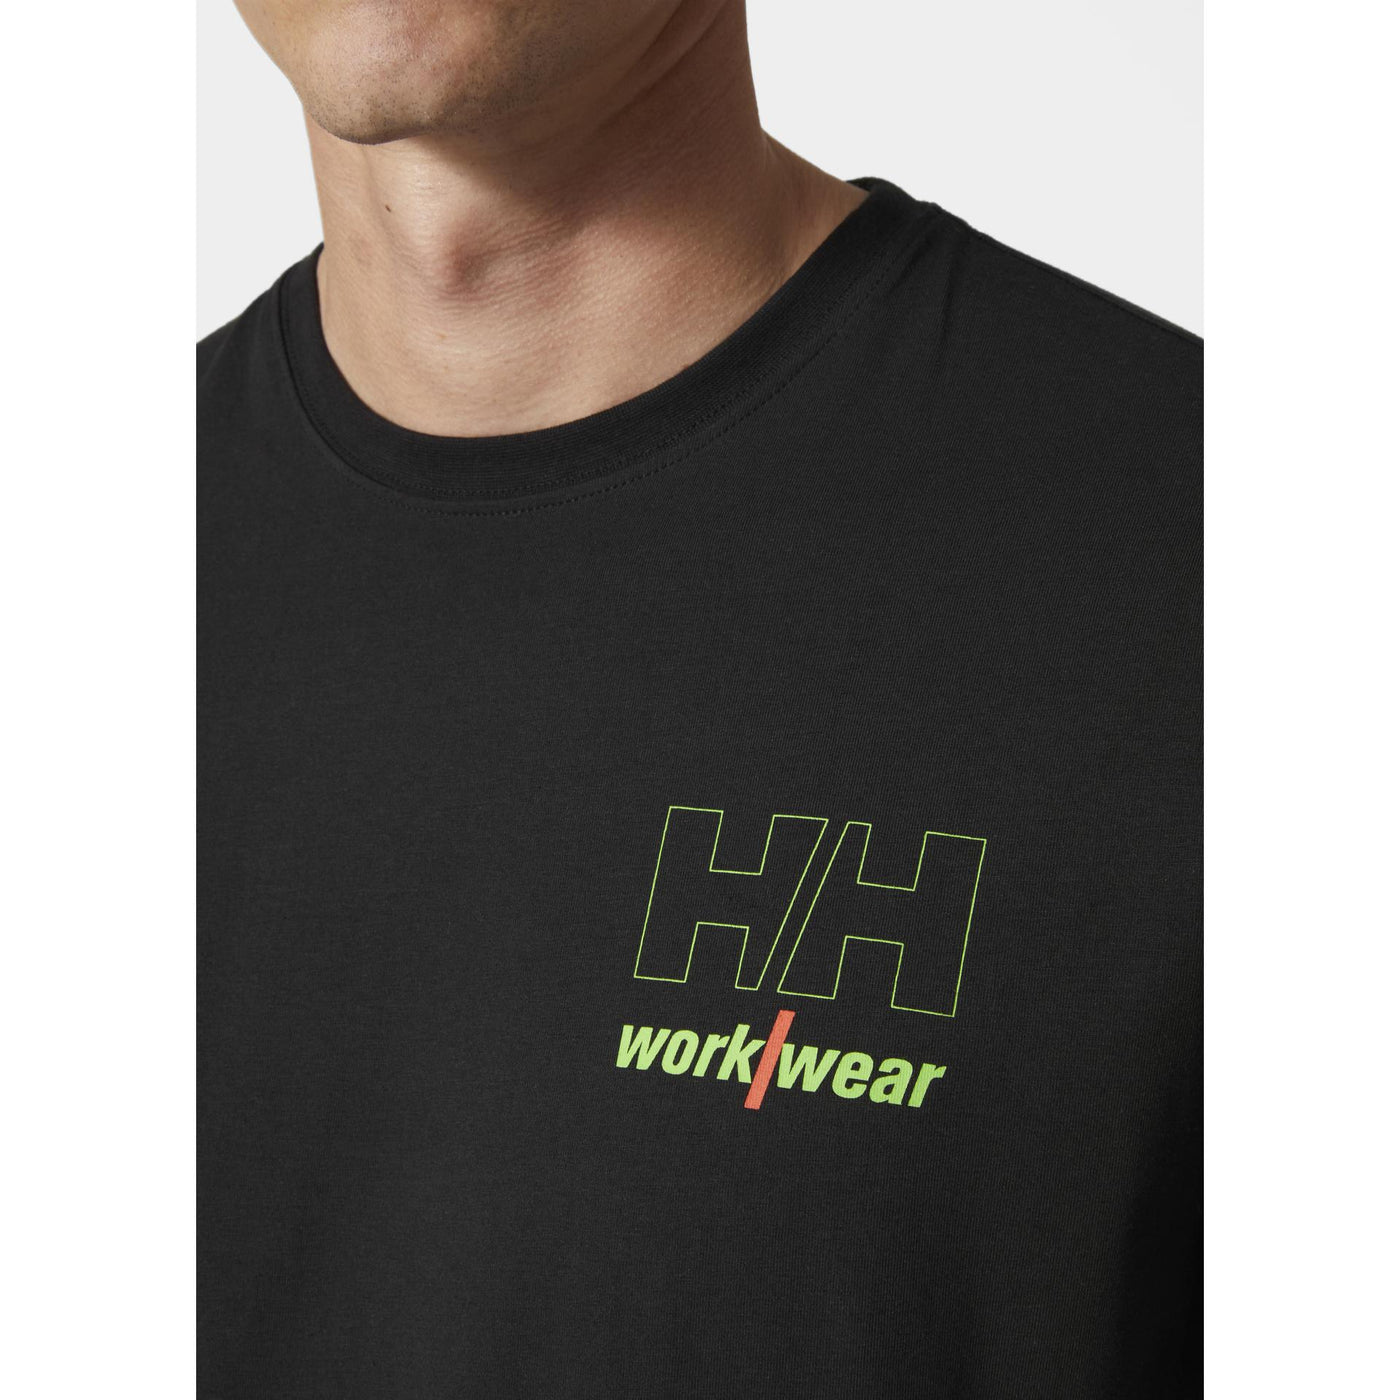 Helly Hansen HH Workwear Graphic T-Shirt Black3 5 #colour_black3